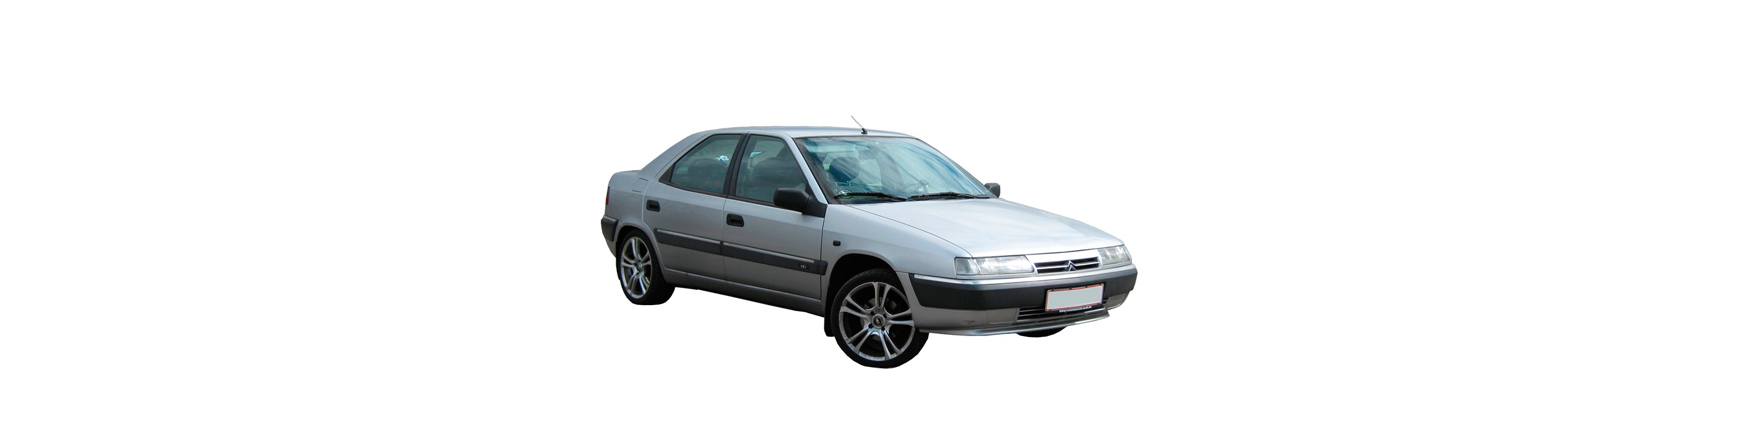 Recambios de Citroën Xantia de 1993 a 1998. Carrocería y mecánica.